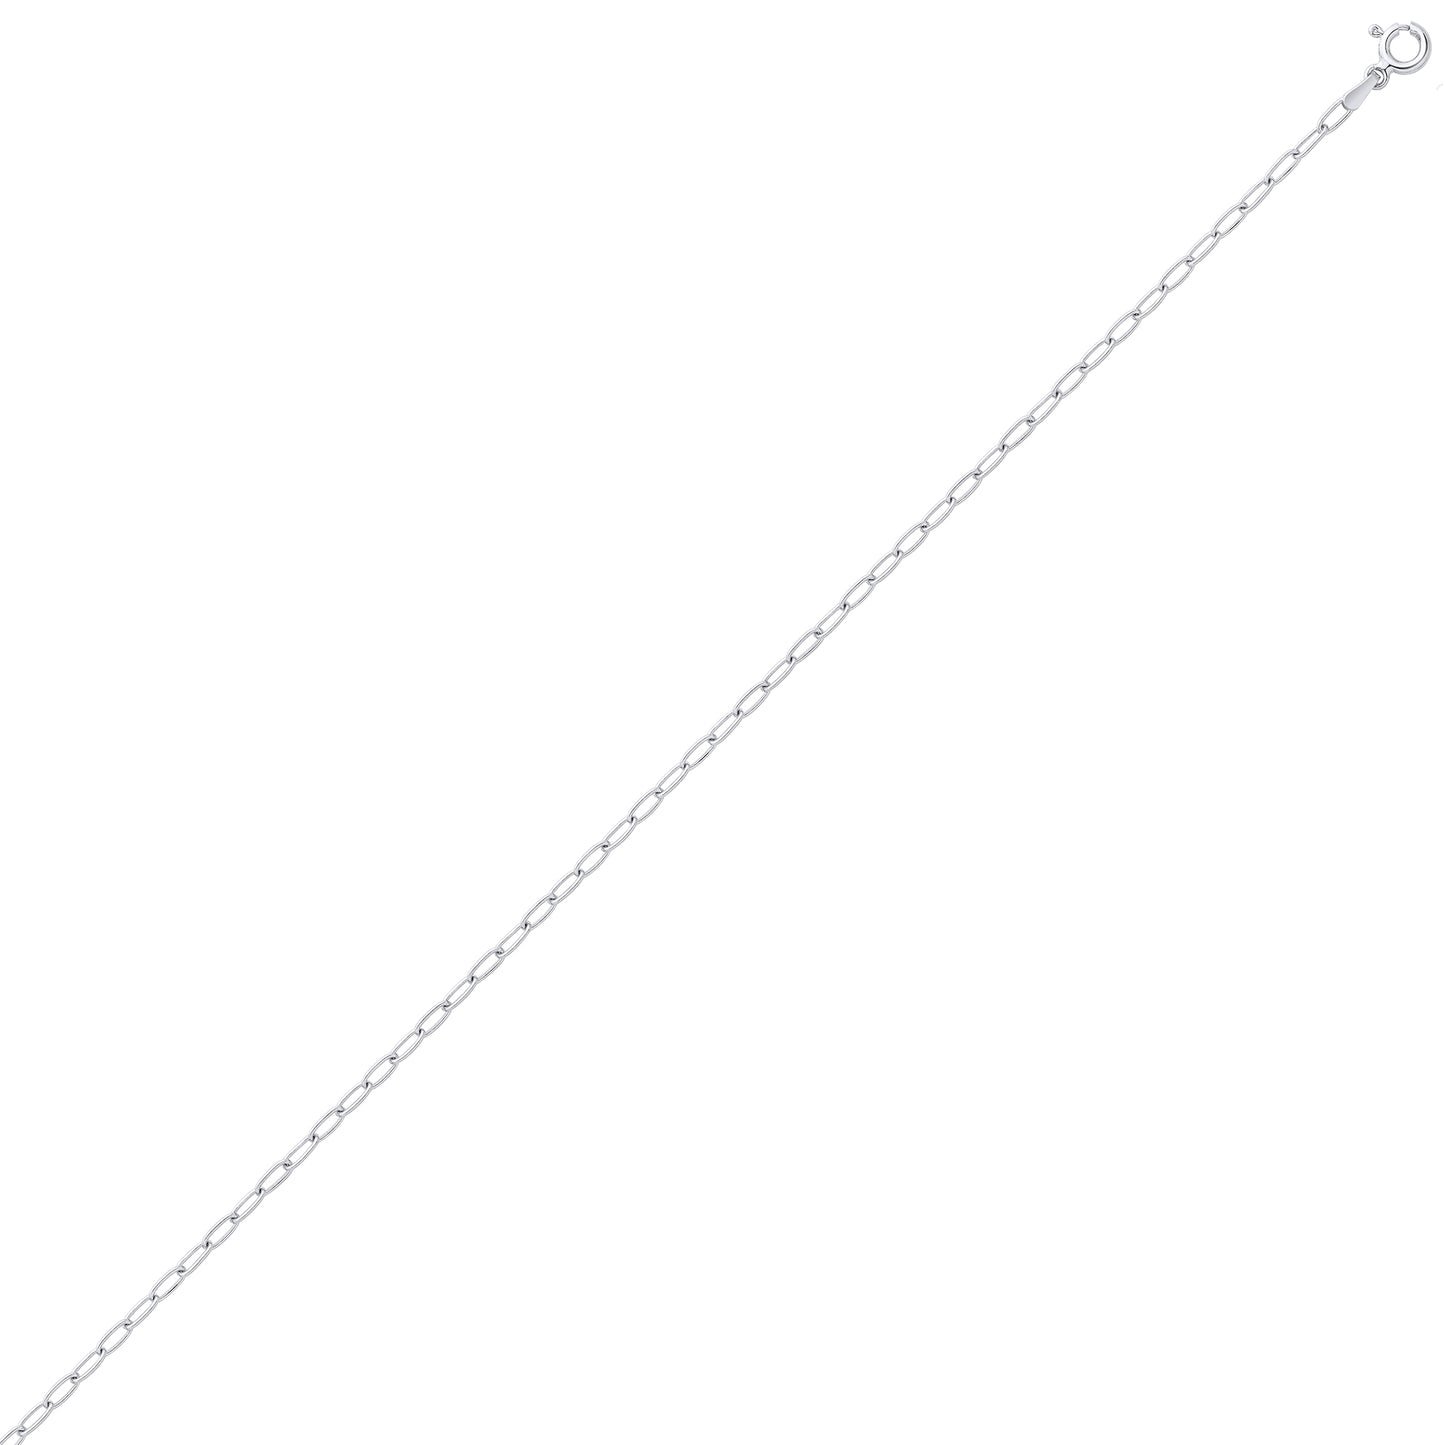 Unisex Silver  Paper Clip Chain Necklace - GVCH40